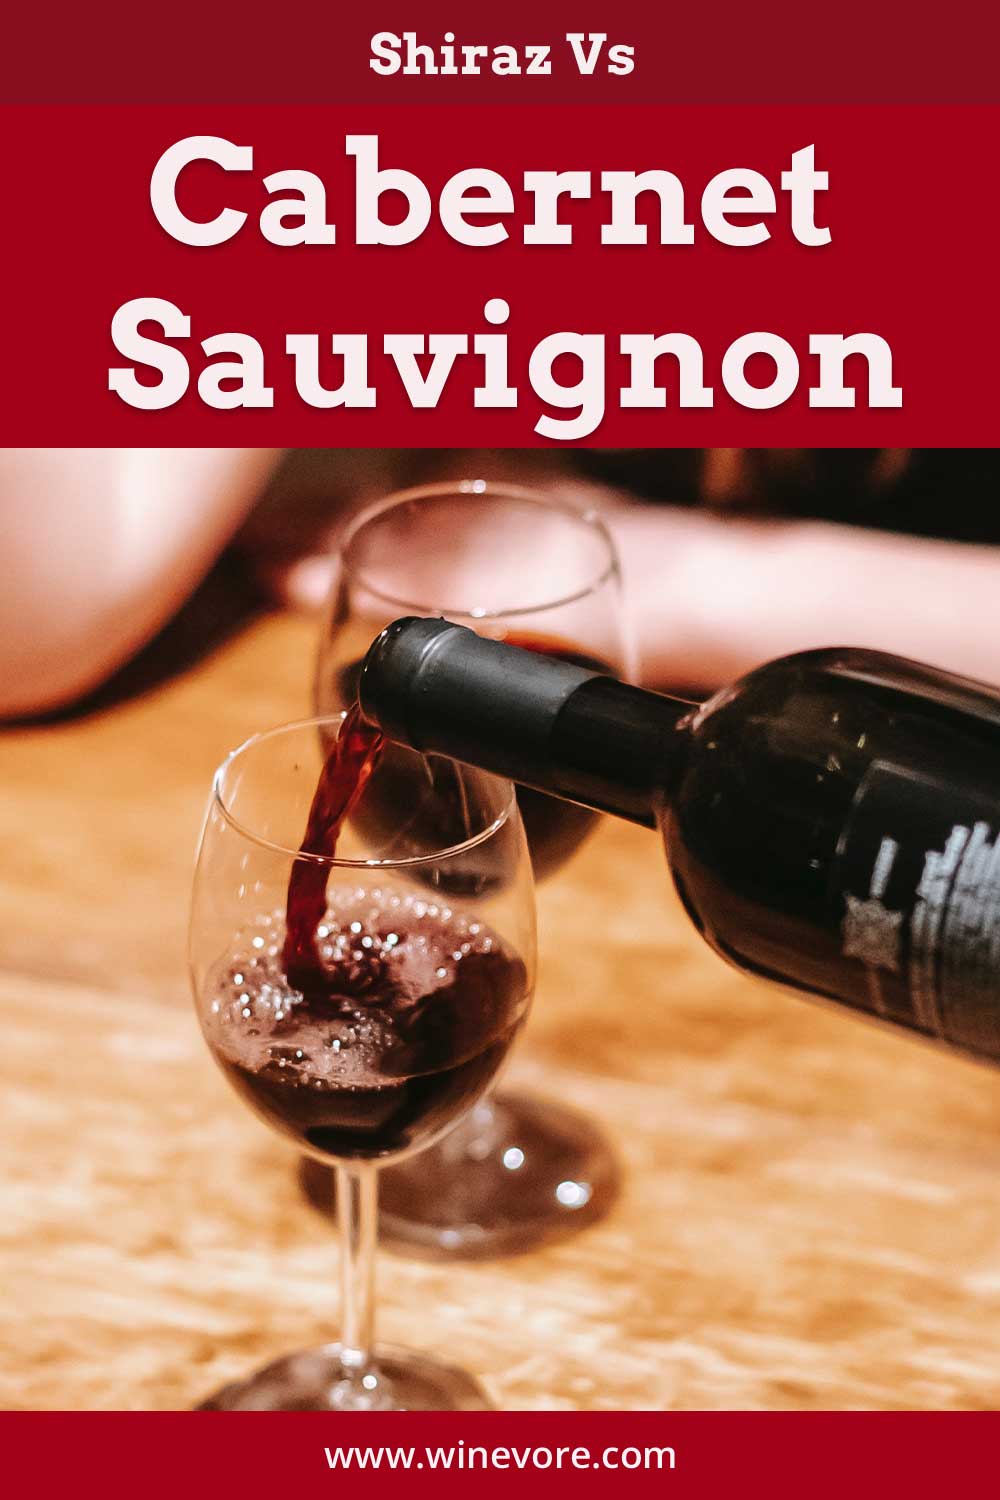 Pouring red wine into a glass from a bottle - Shiraz Vs Cabernet Sauvignon.